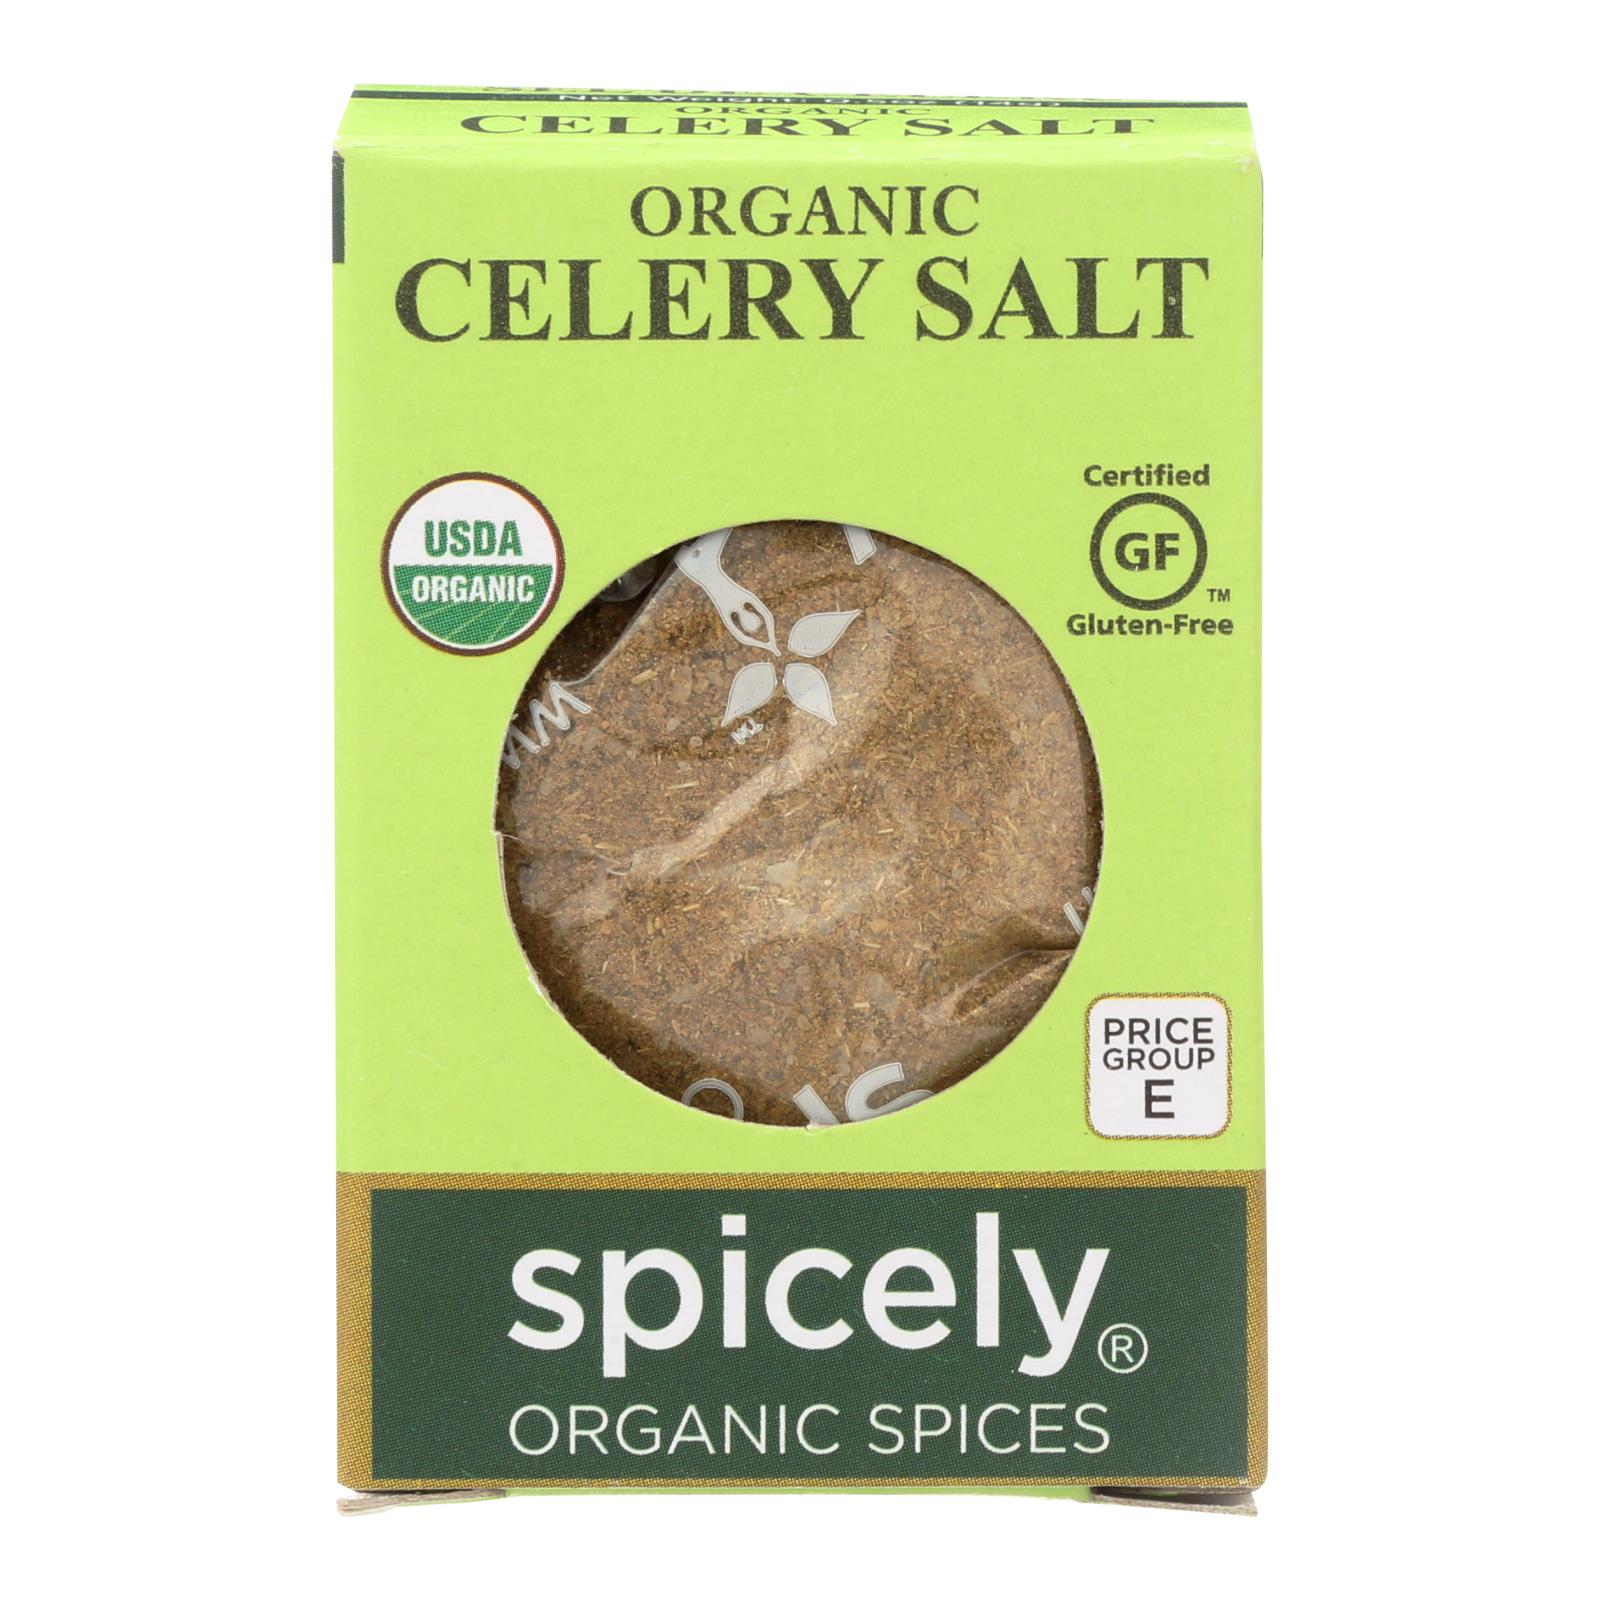 Spicely Organics - Organic Celery Salt - 6개 묶음상품 - 0.5 oz.